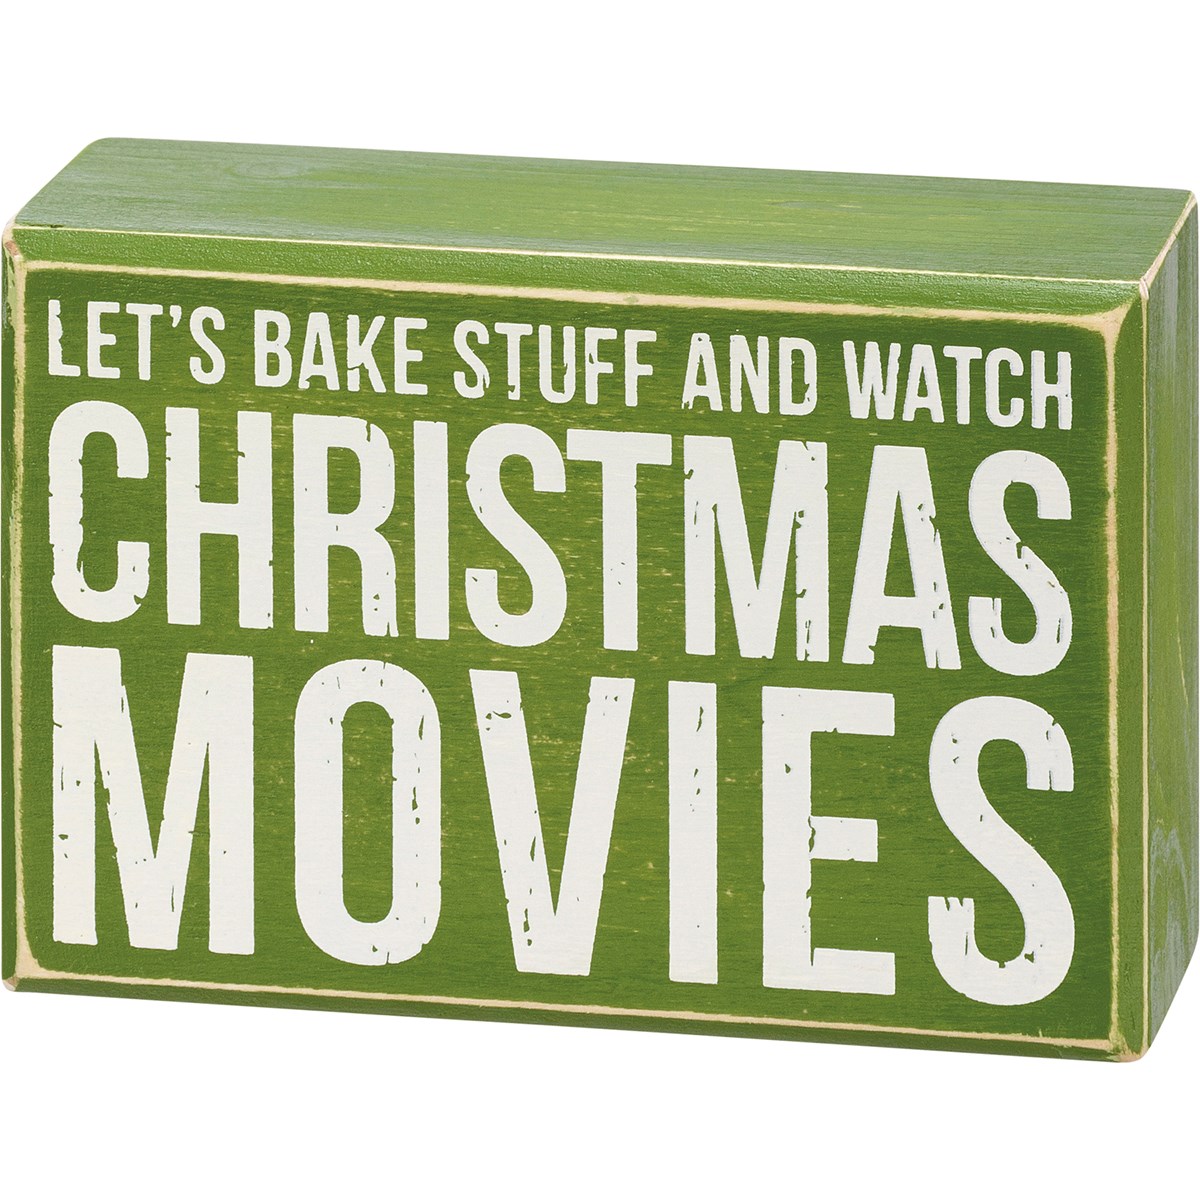 Bake Stuff And Watch Movies Box Sign And Sock Set - Wood, Cotton, Nylon, Spandex, Ribbon